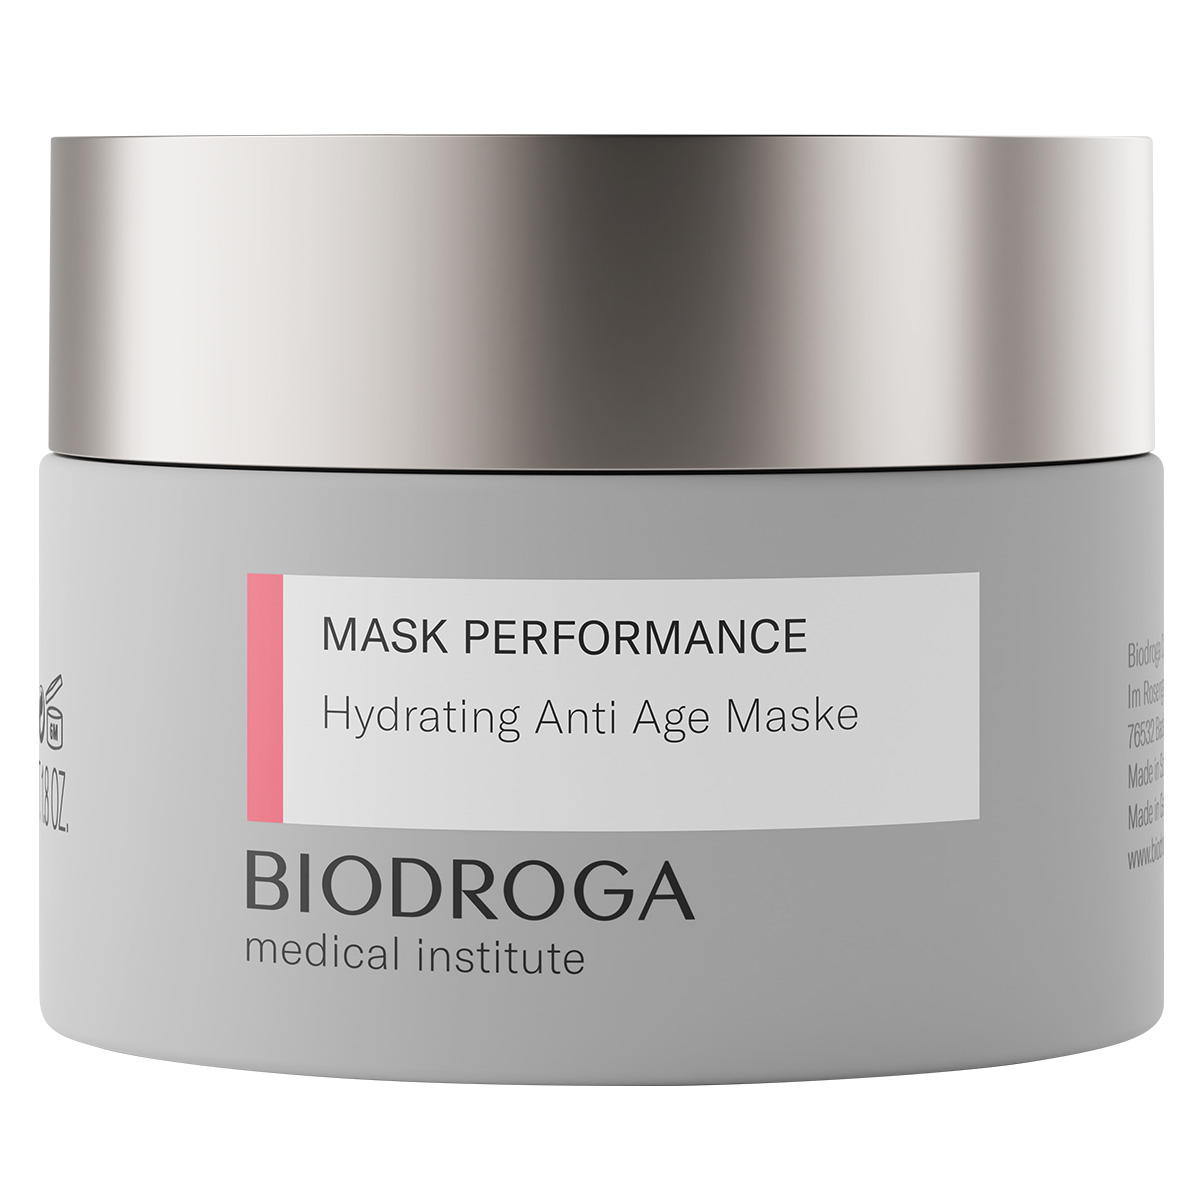 BIODROGA Medical Institute MASK PERFORMANCE Masque anti-âge hydratant 50 ml - 1